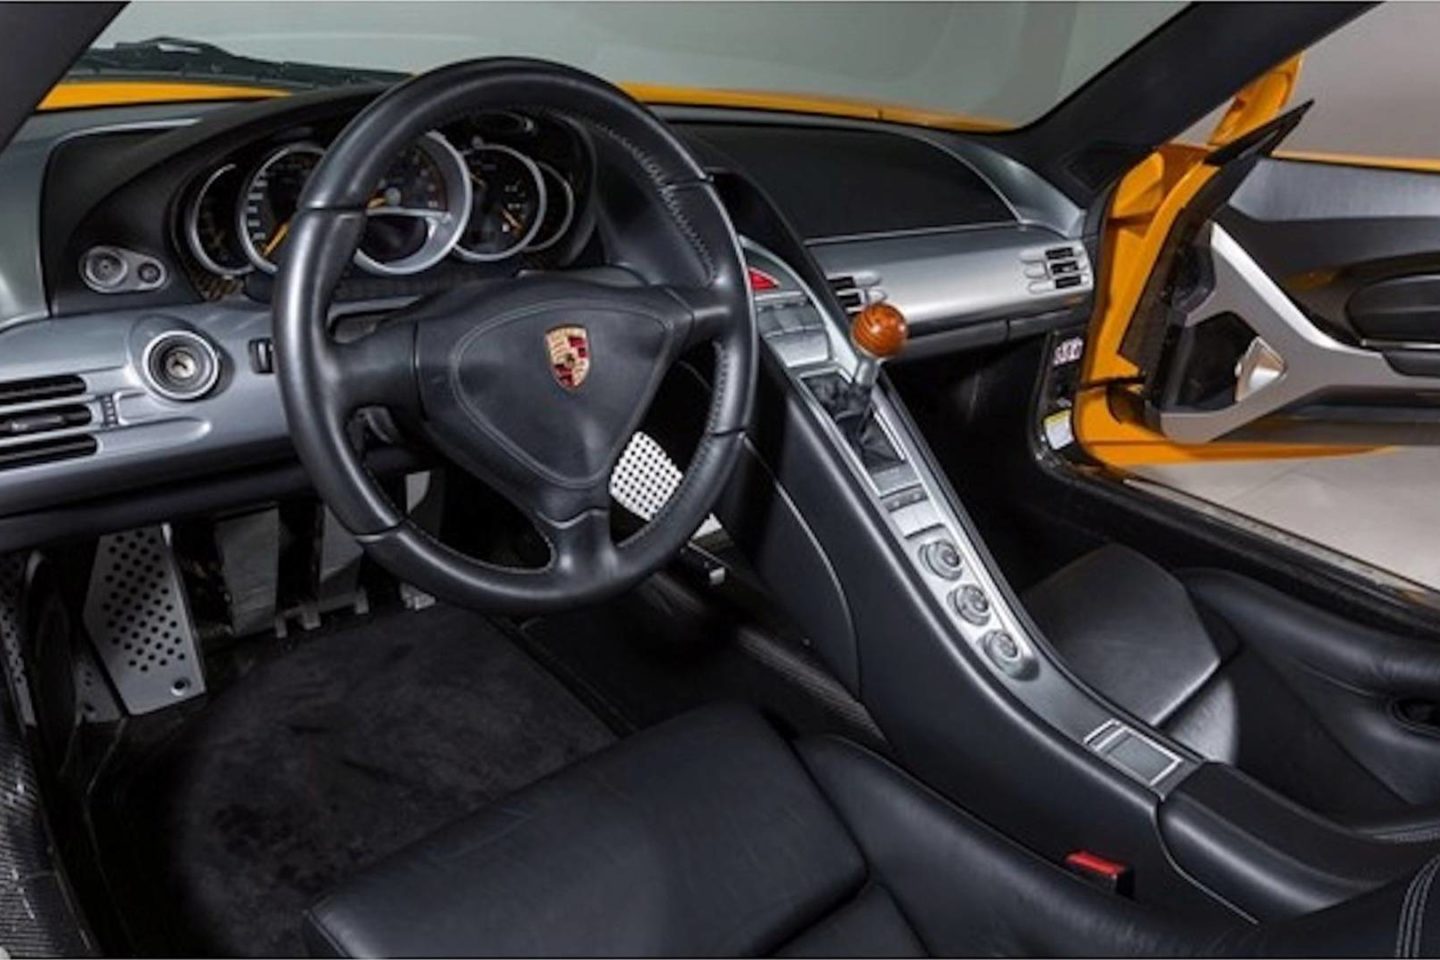 Porsche Carrera GT Amarelo